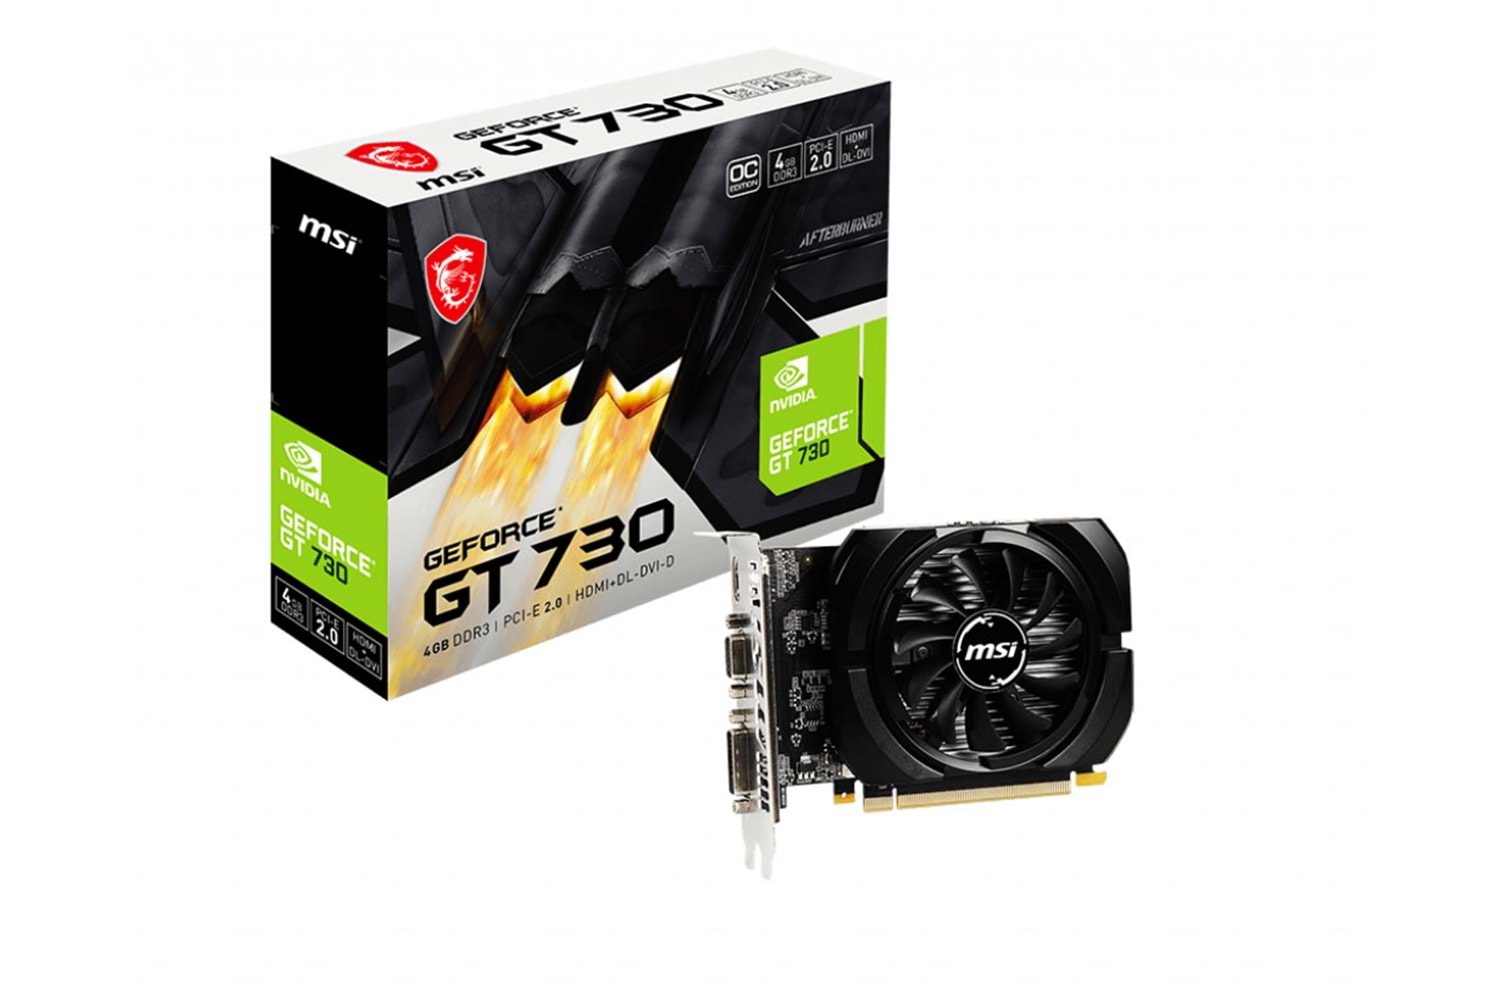 Msi GeForce GT 730 N730K-4GD3/OC 4GB DDR3 64Bit DX12 Gaming (Oyuncu) Ekran Kartı